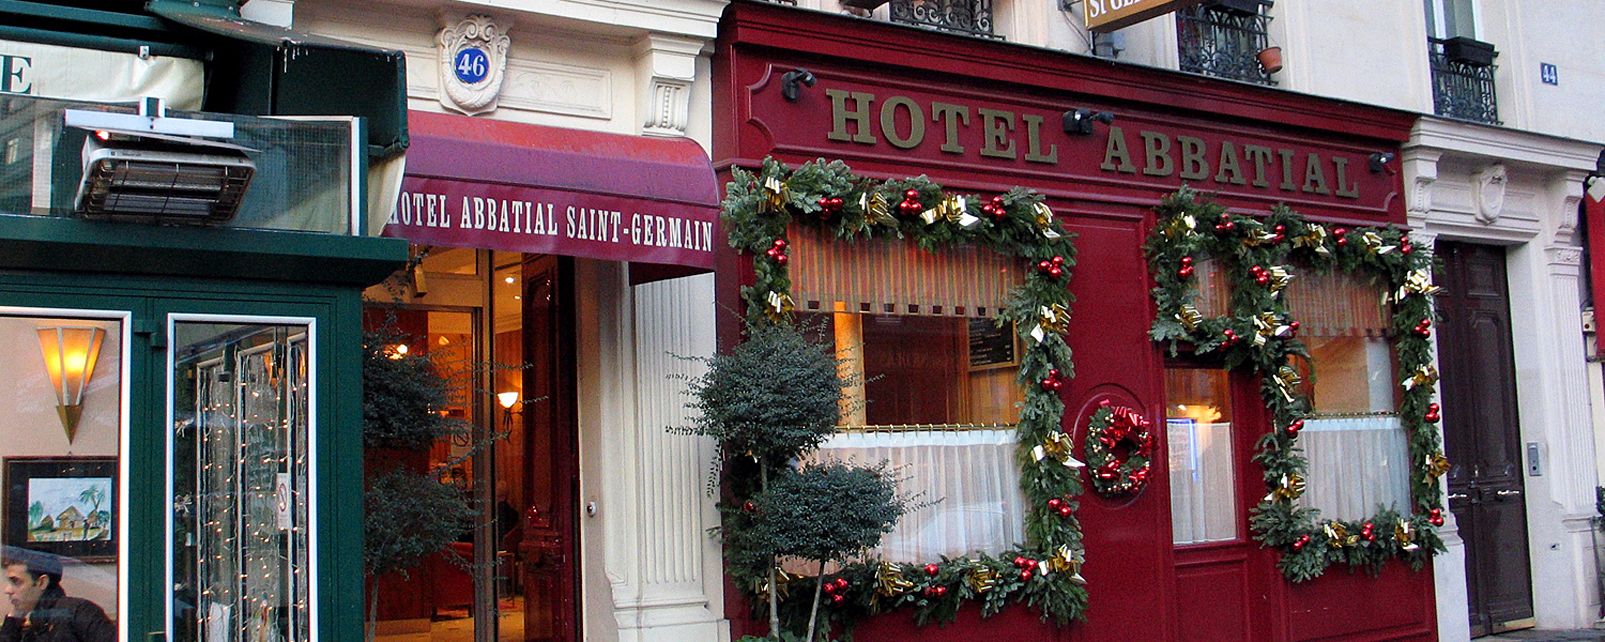 Hotel Abbatial St Germain